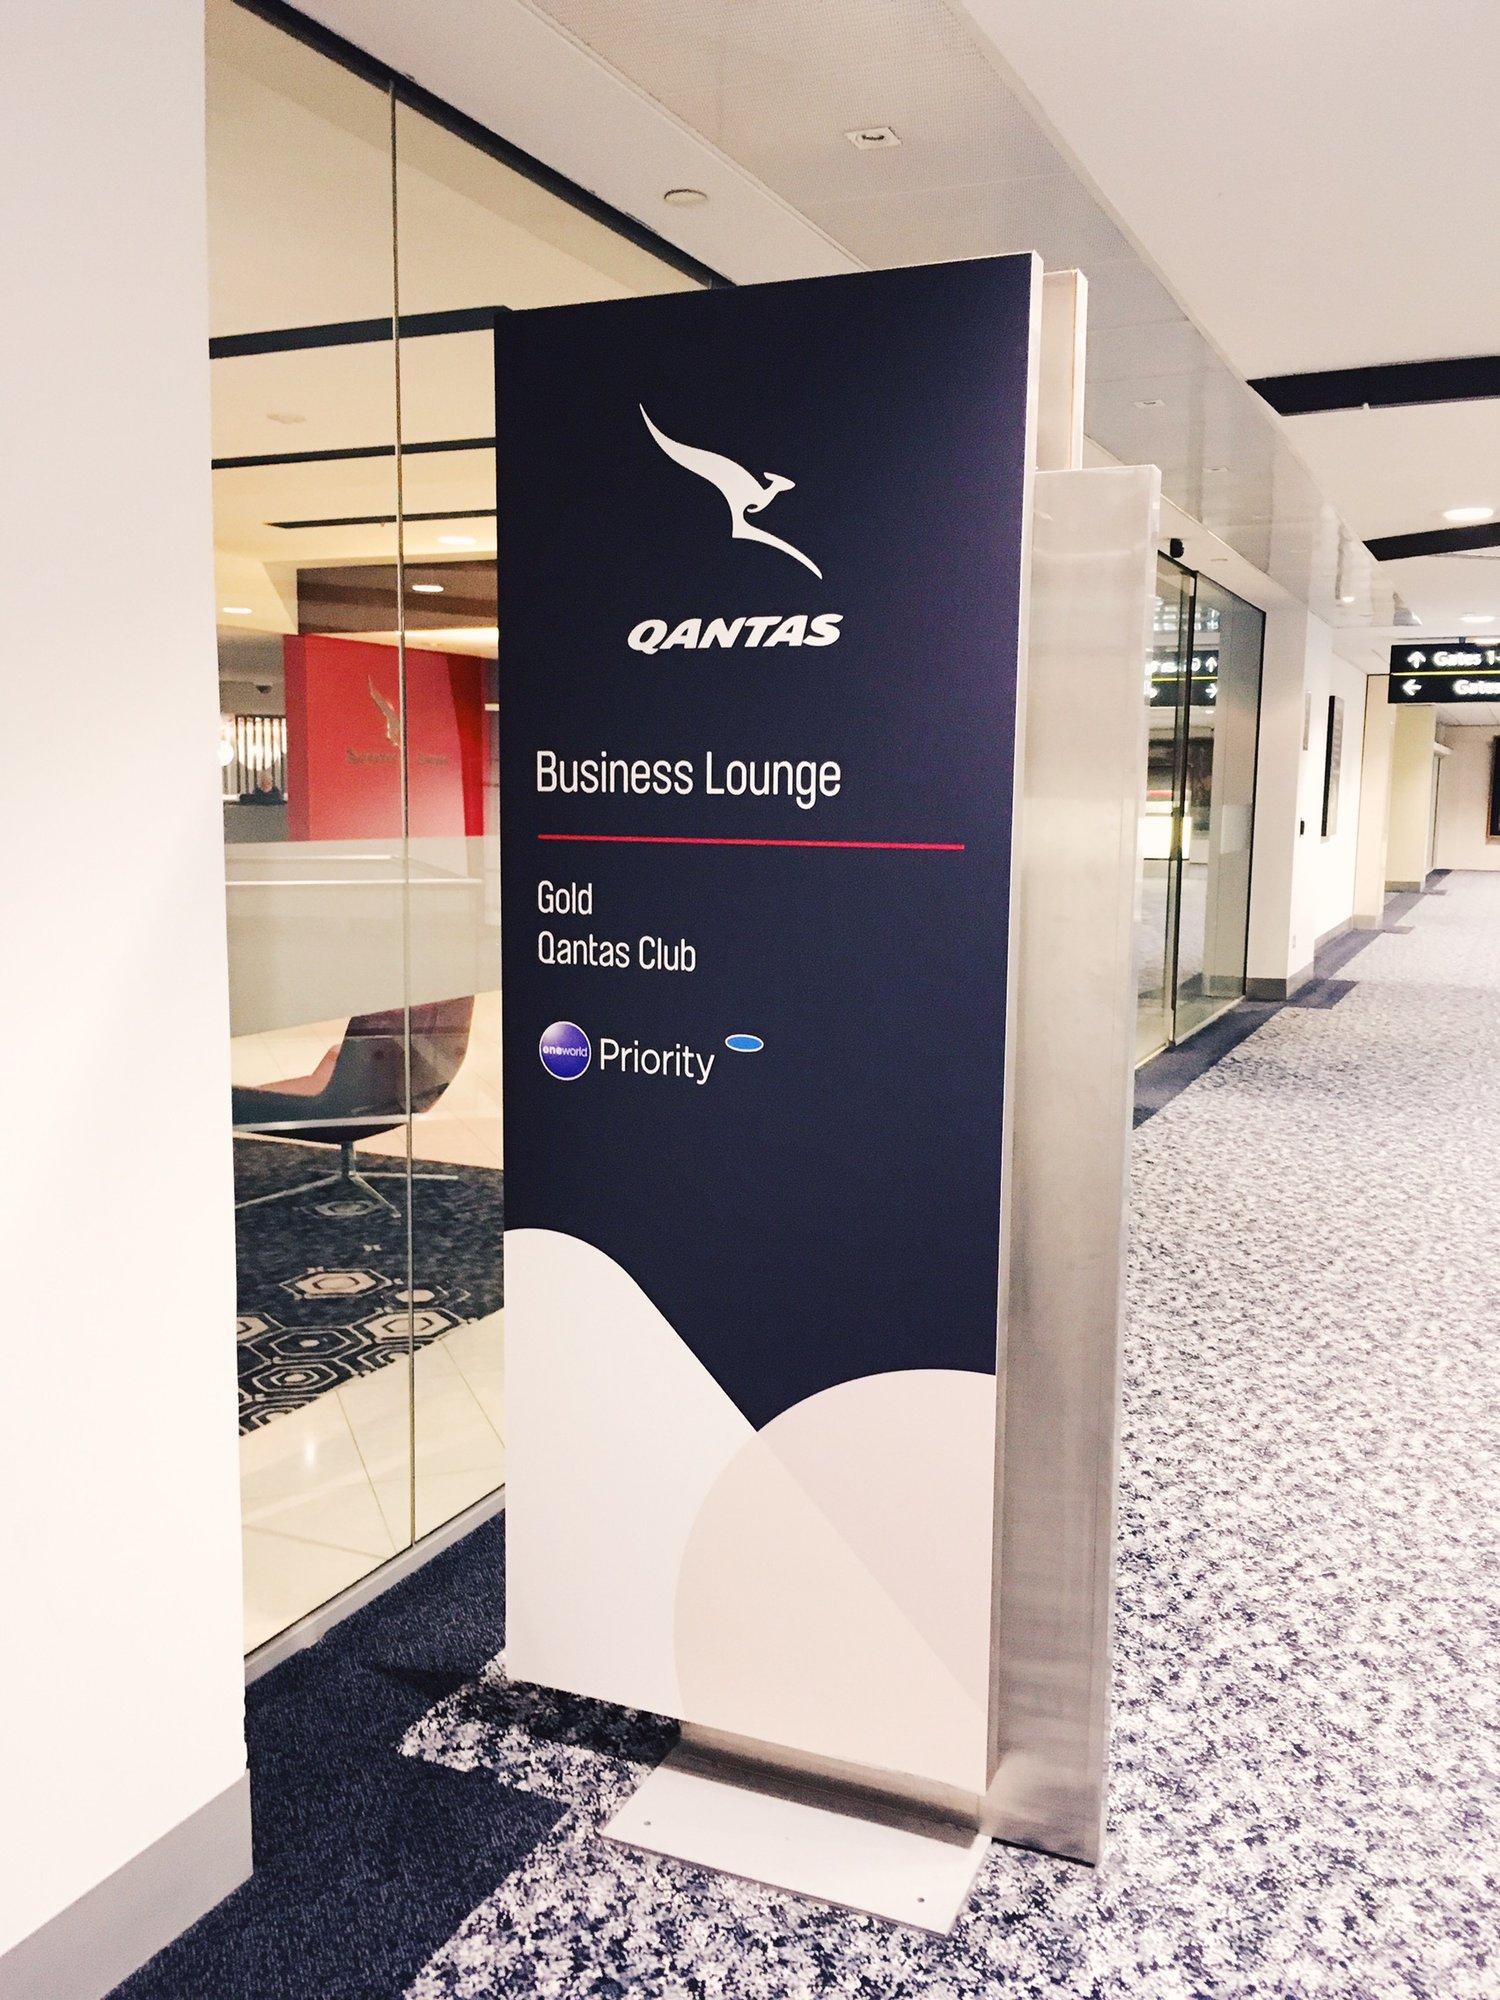 Qantas Airways International Business Lounge image 17 of 17